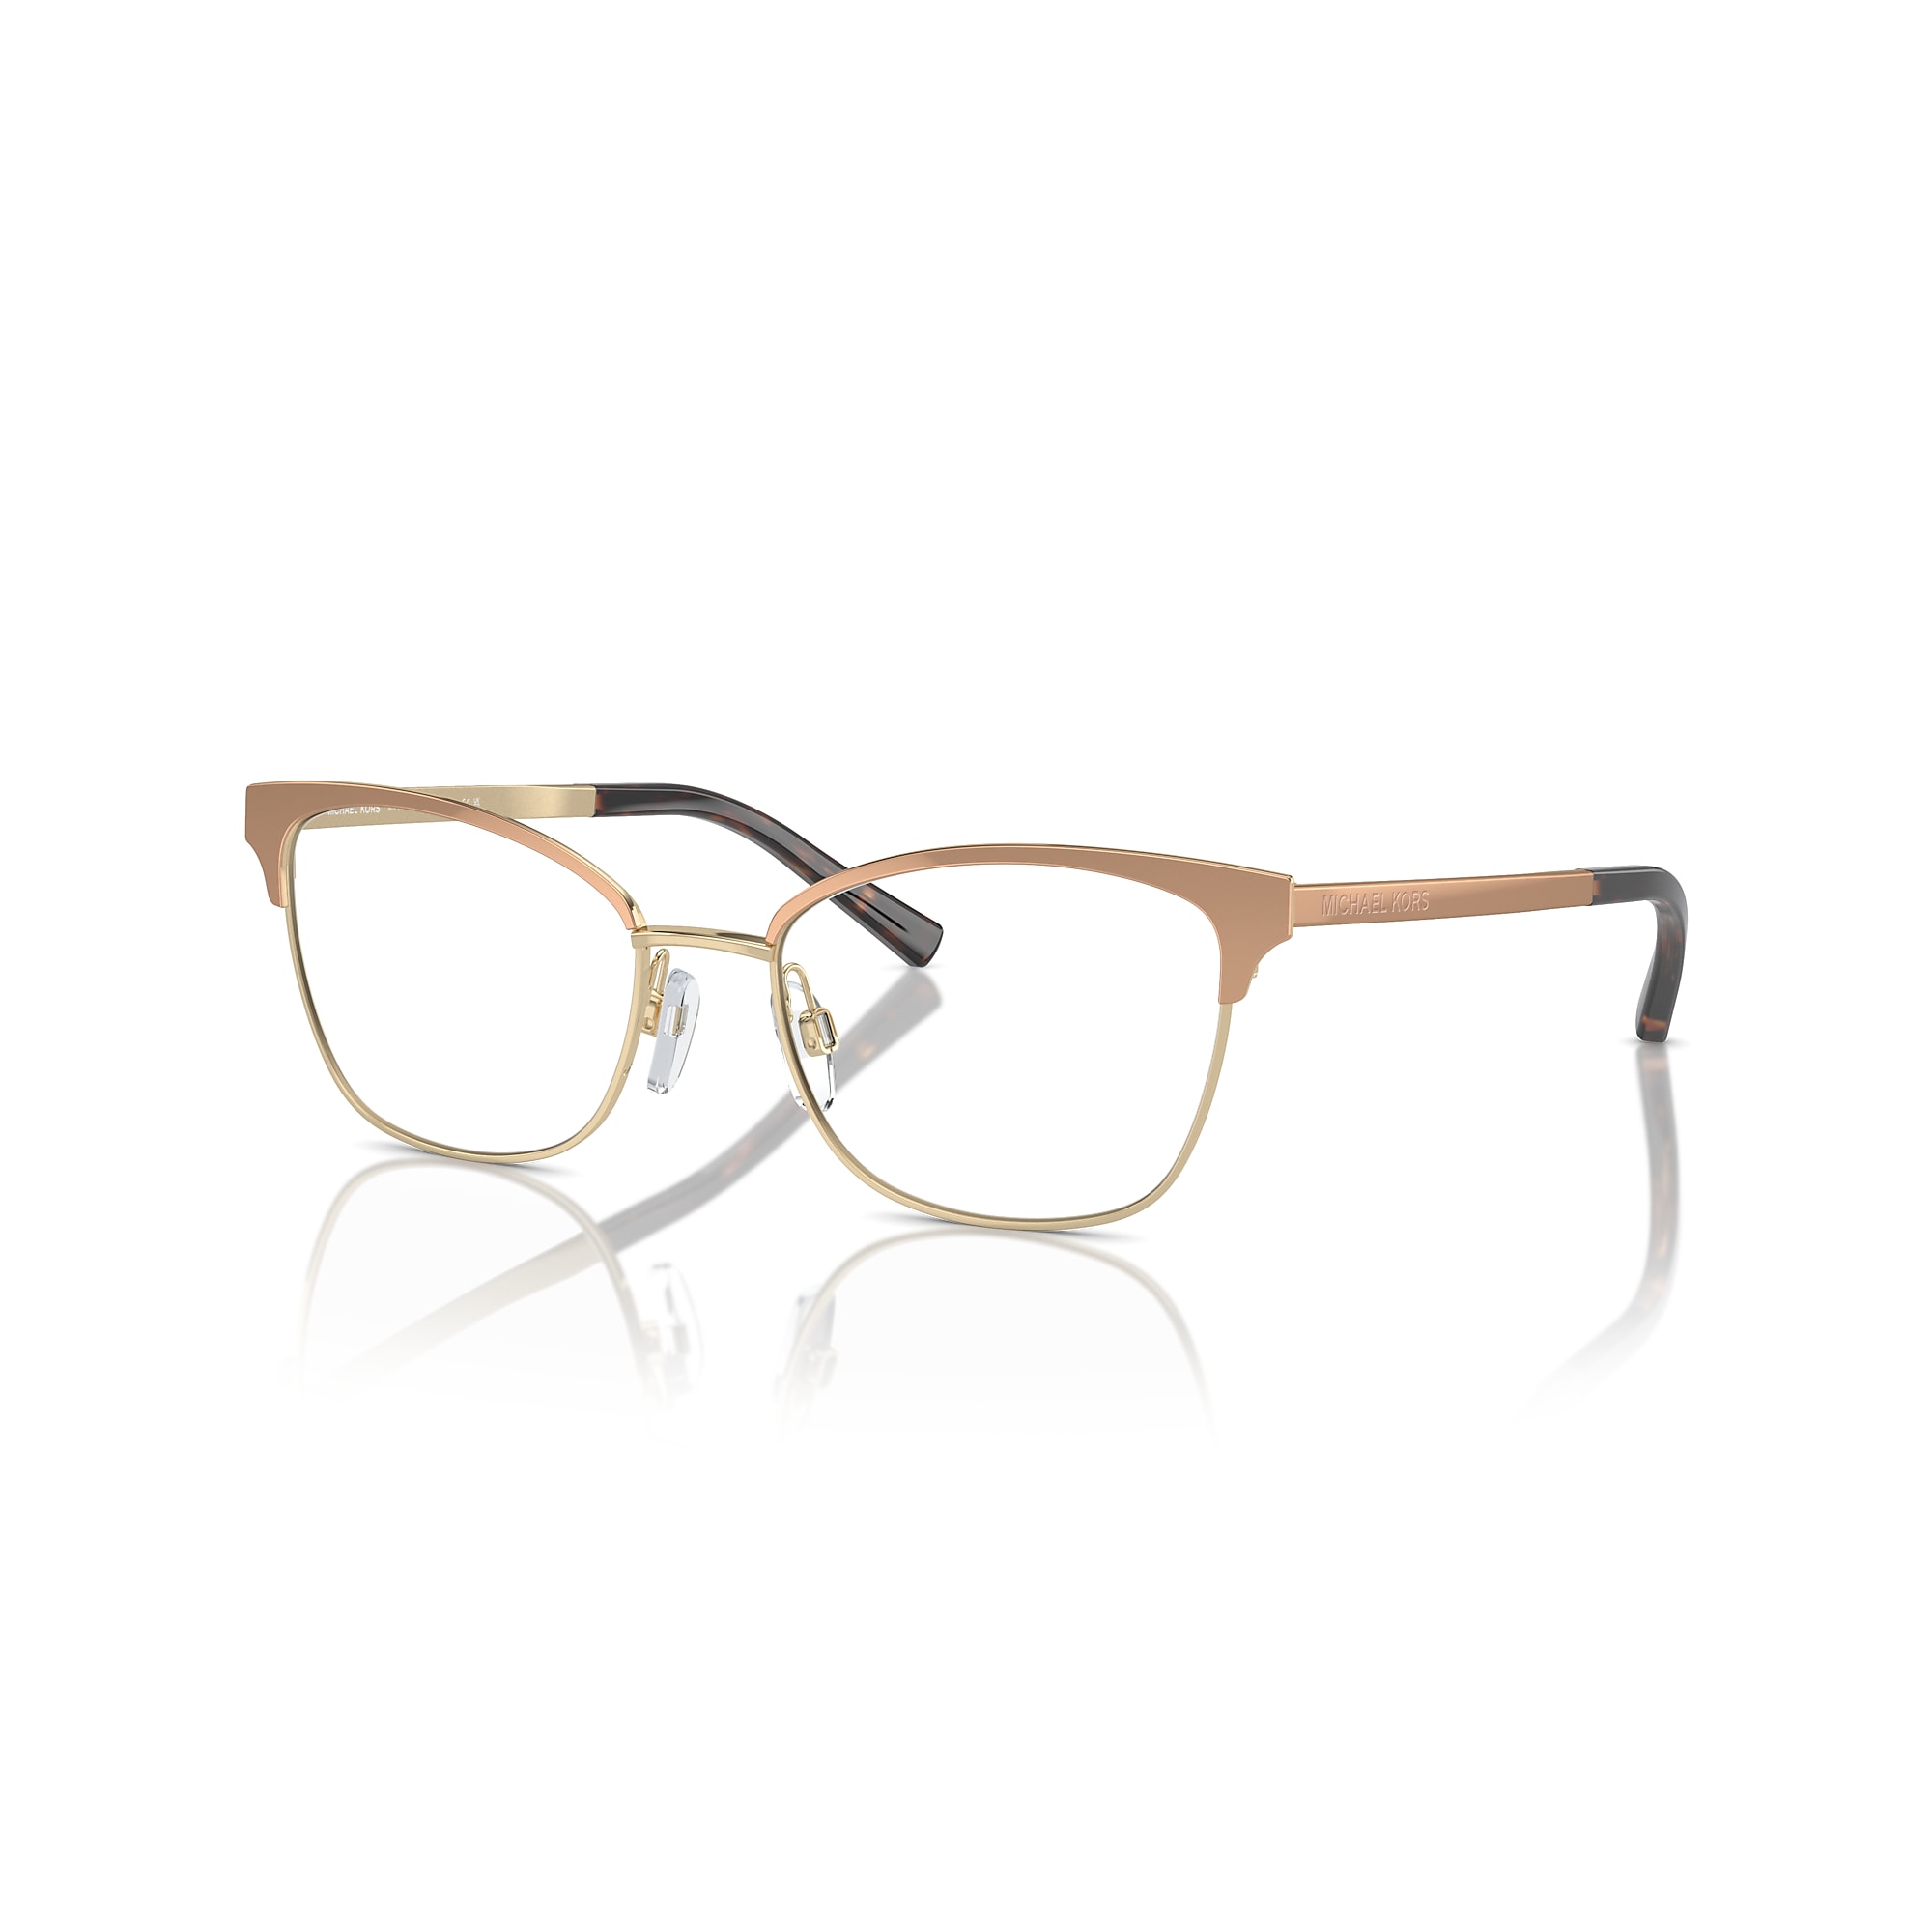 Michael Kors Shiny Mink Eyeglasses | Glasses.com® | Free Shipping